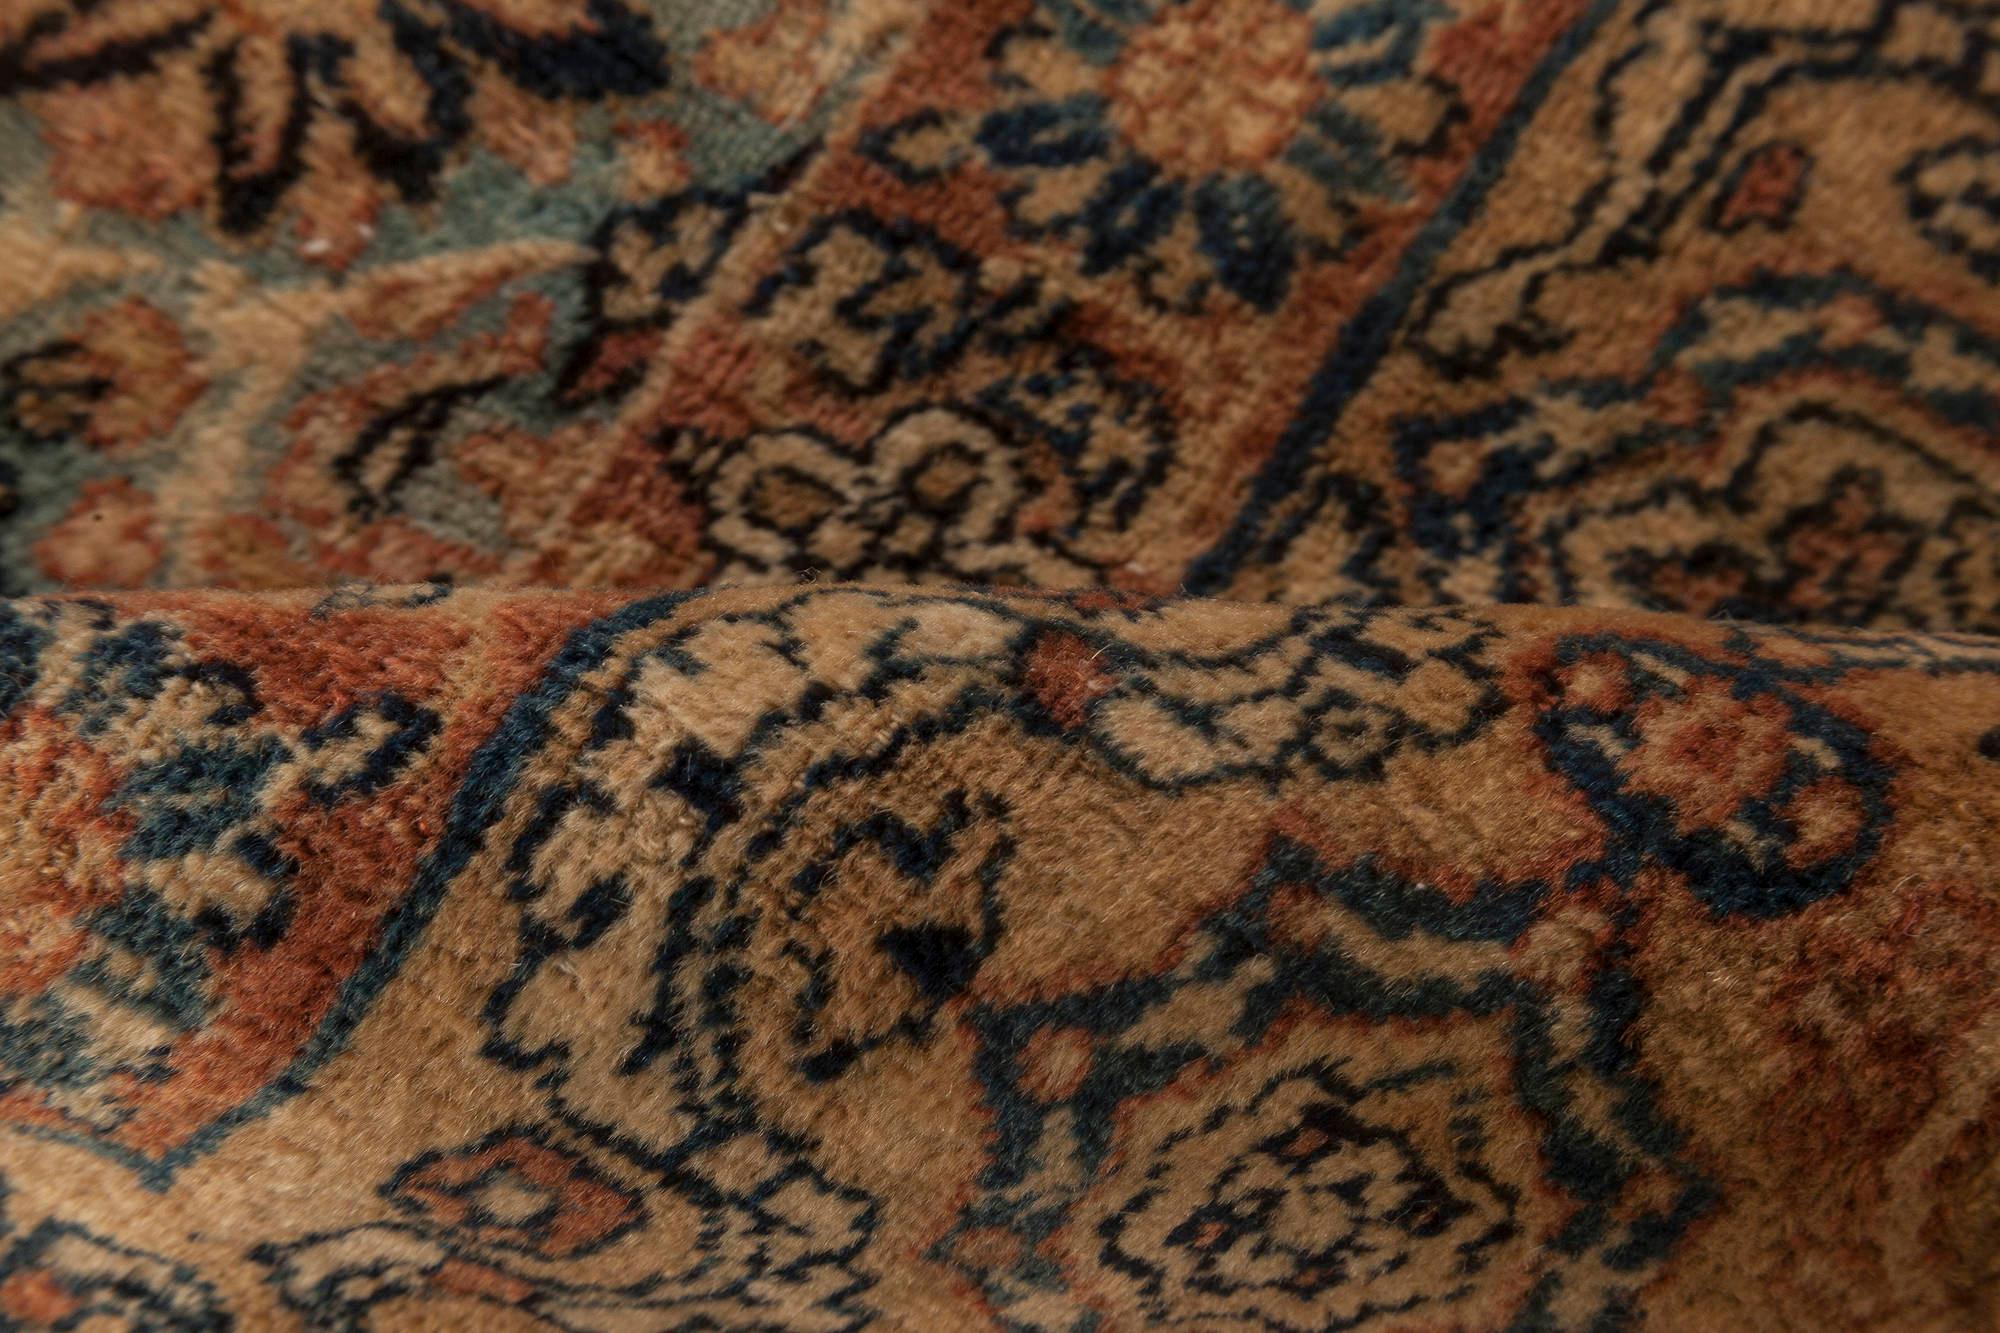 Fine Antique Persian Kirman handwoven wool rug
Size: 4'2